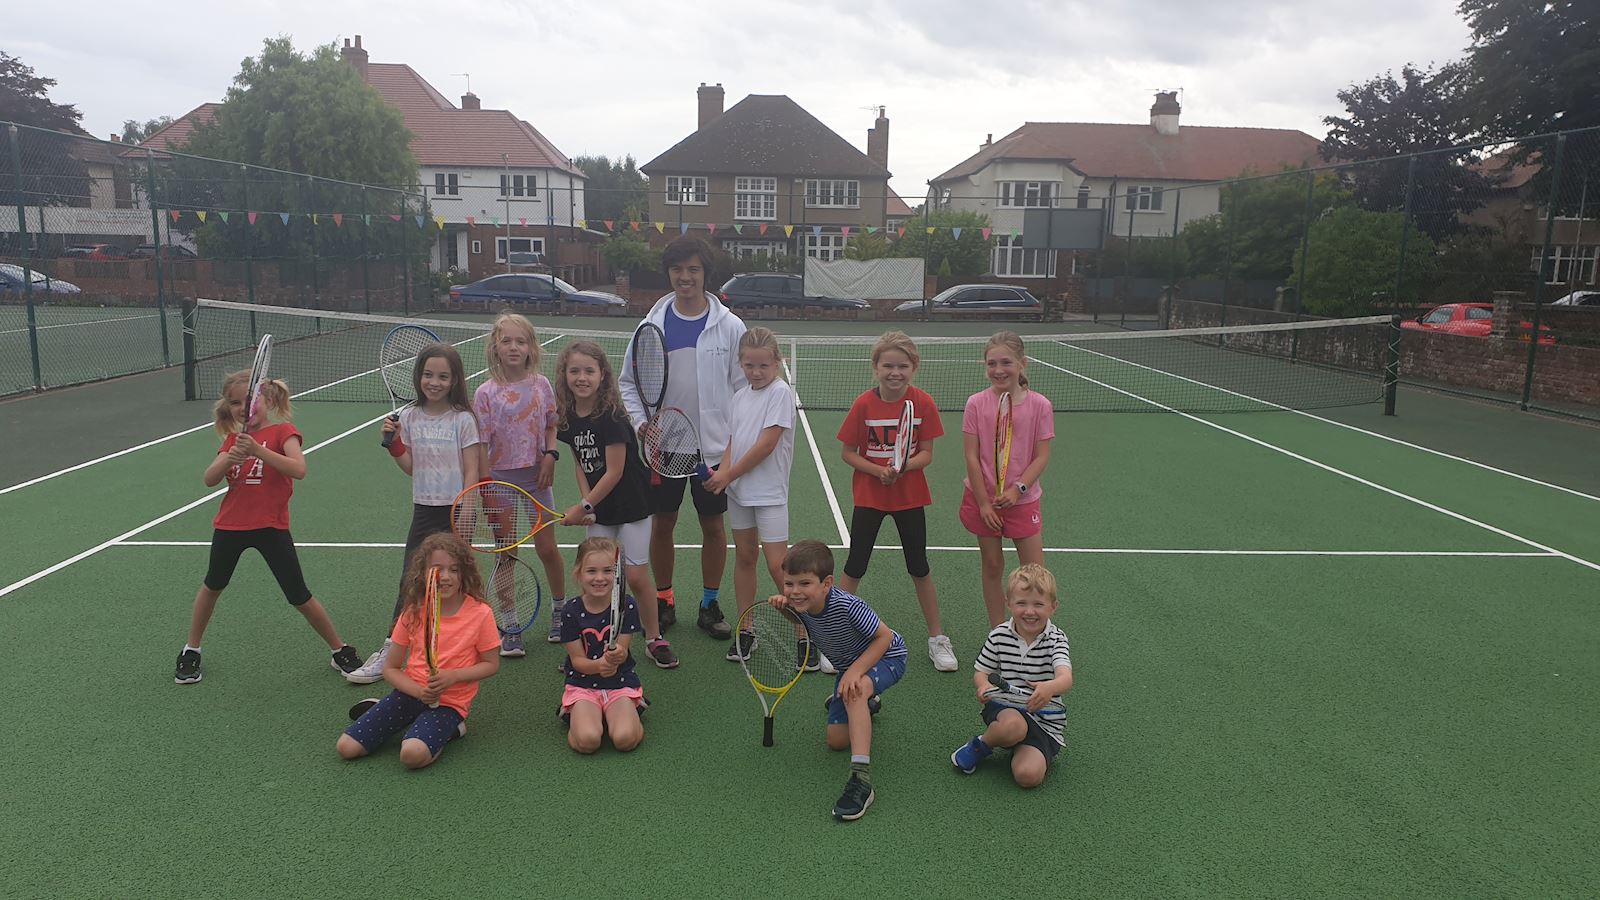 Mini group fun at Bertram Tennis Club